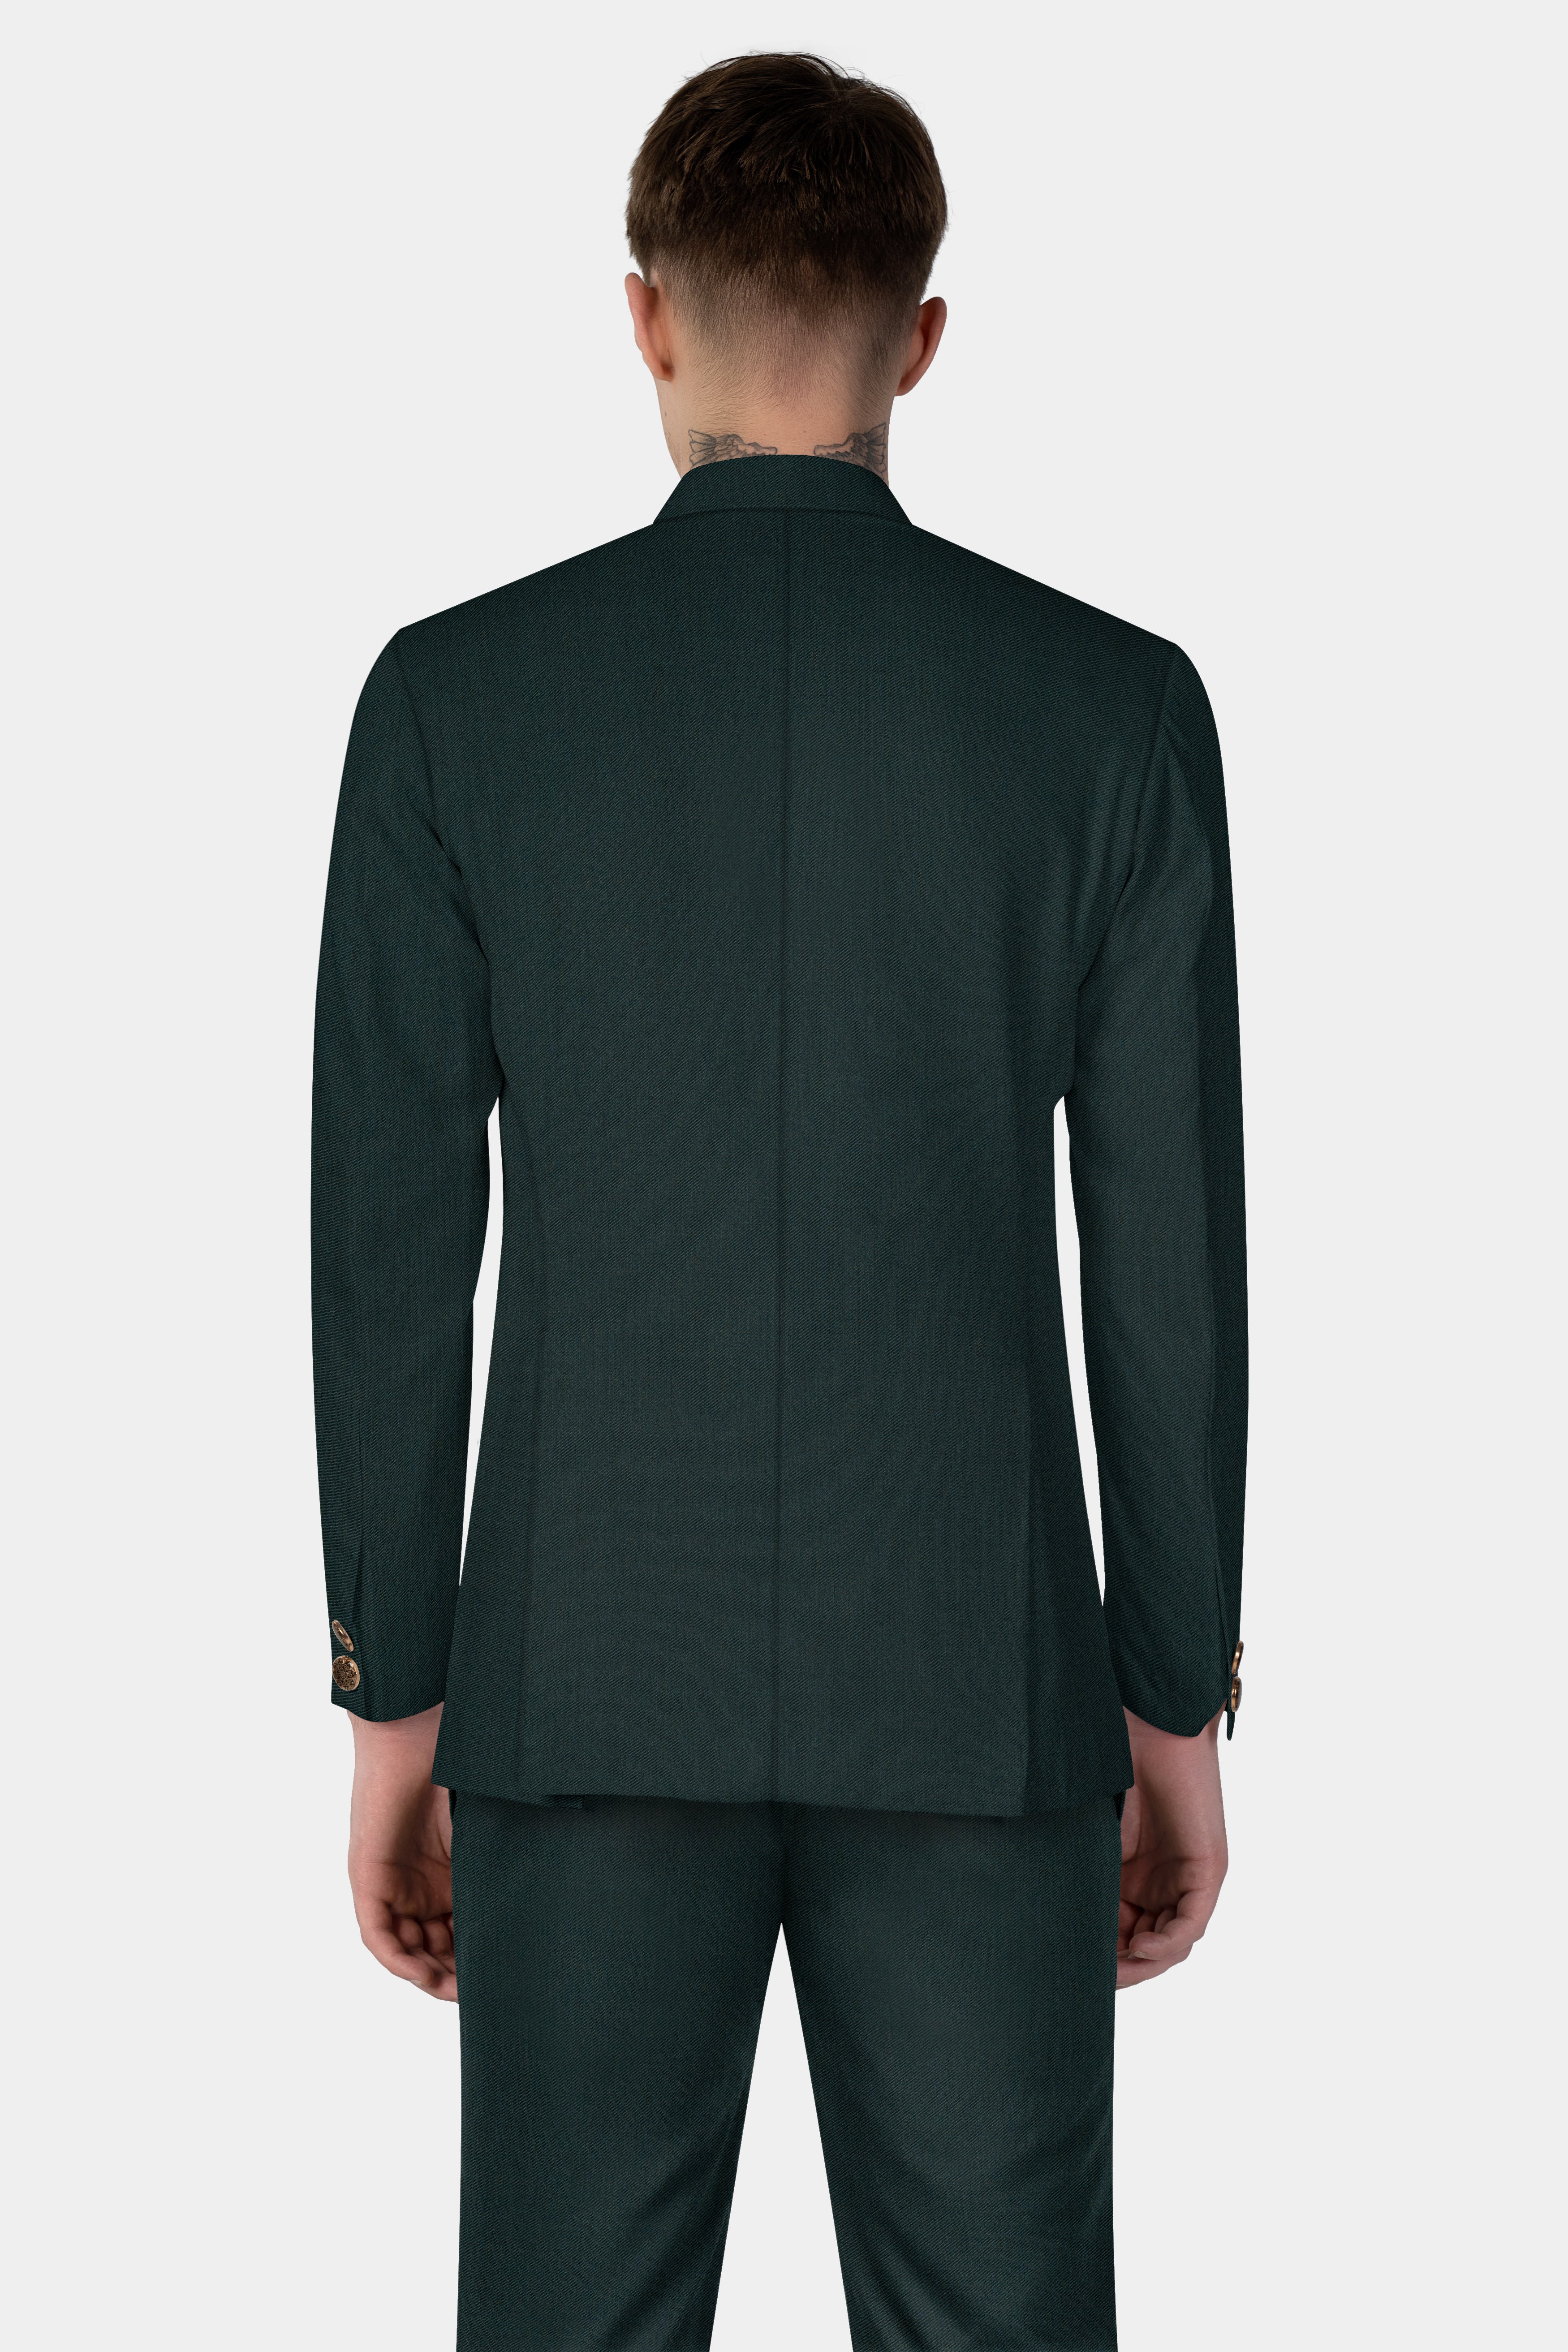 Timber Green Wool Rich Bandhgala Suit